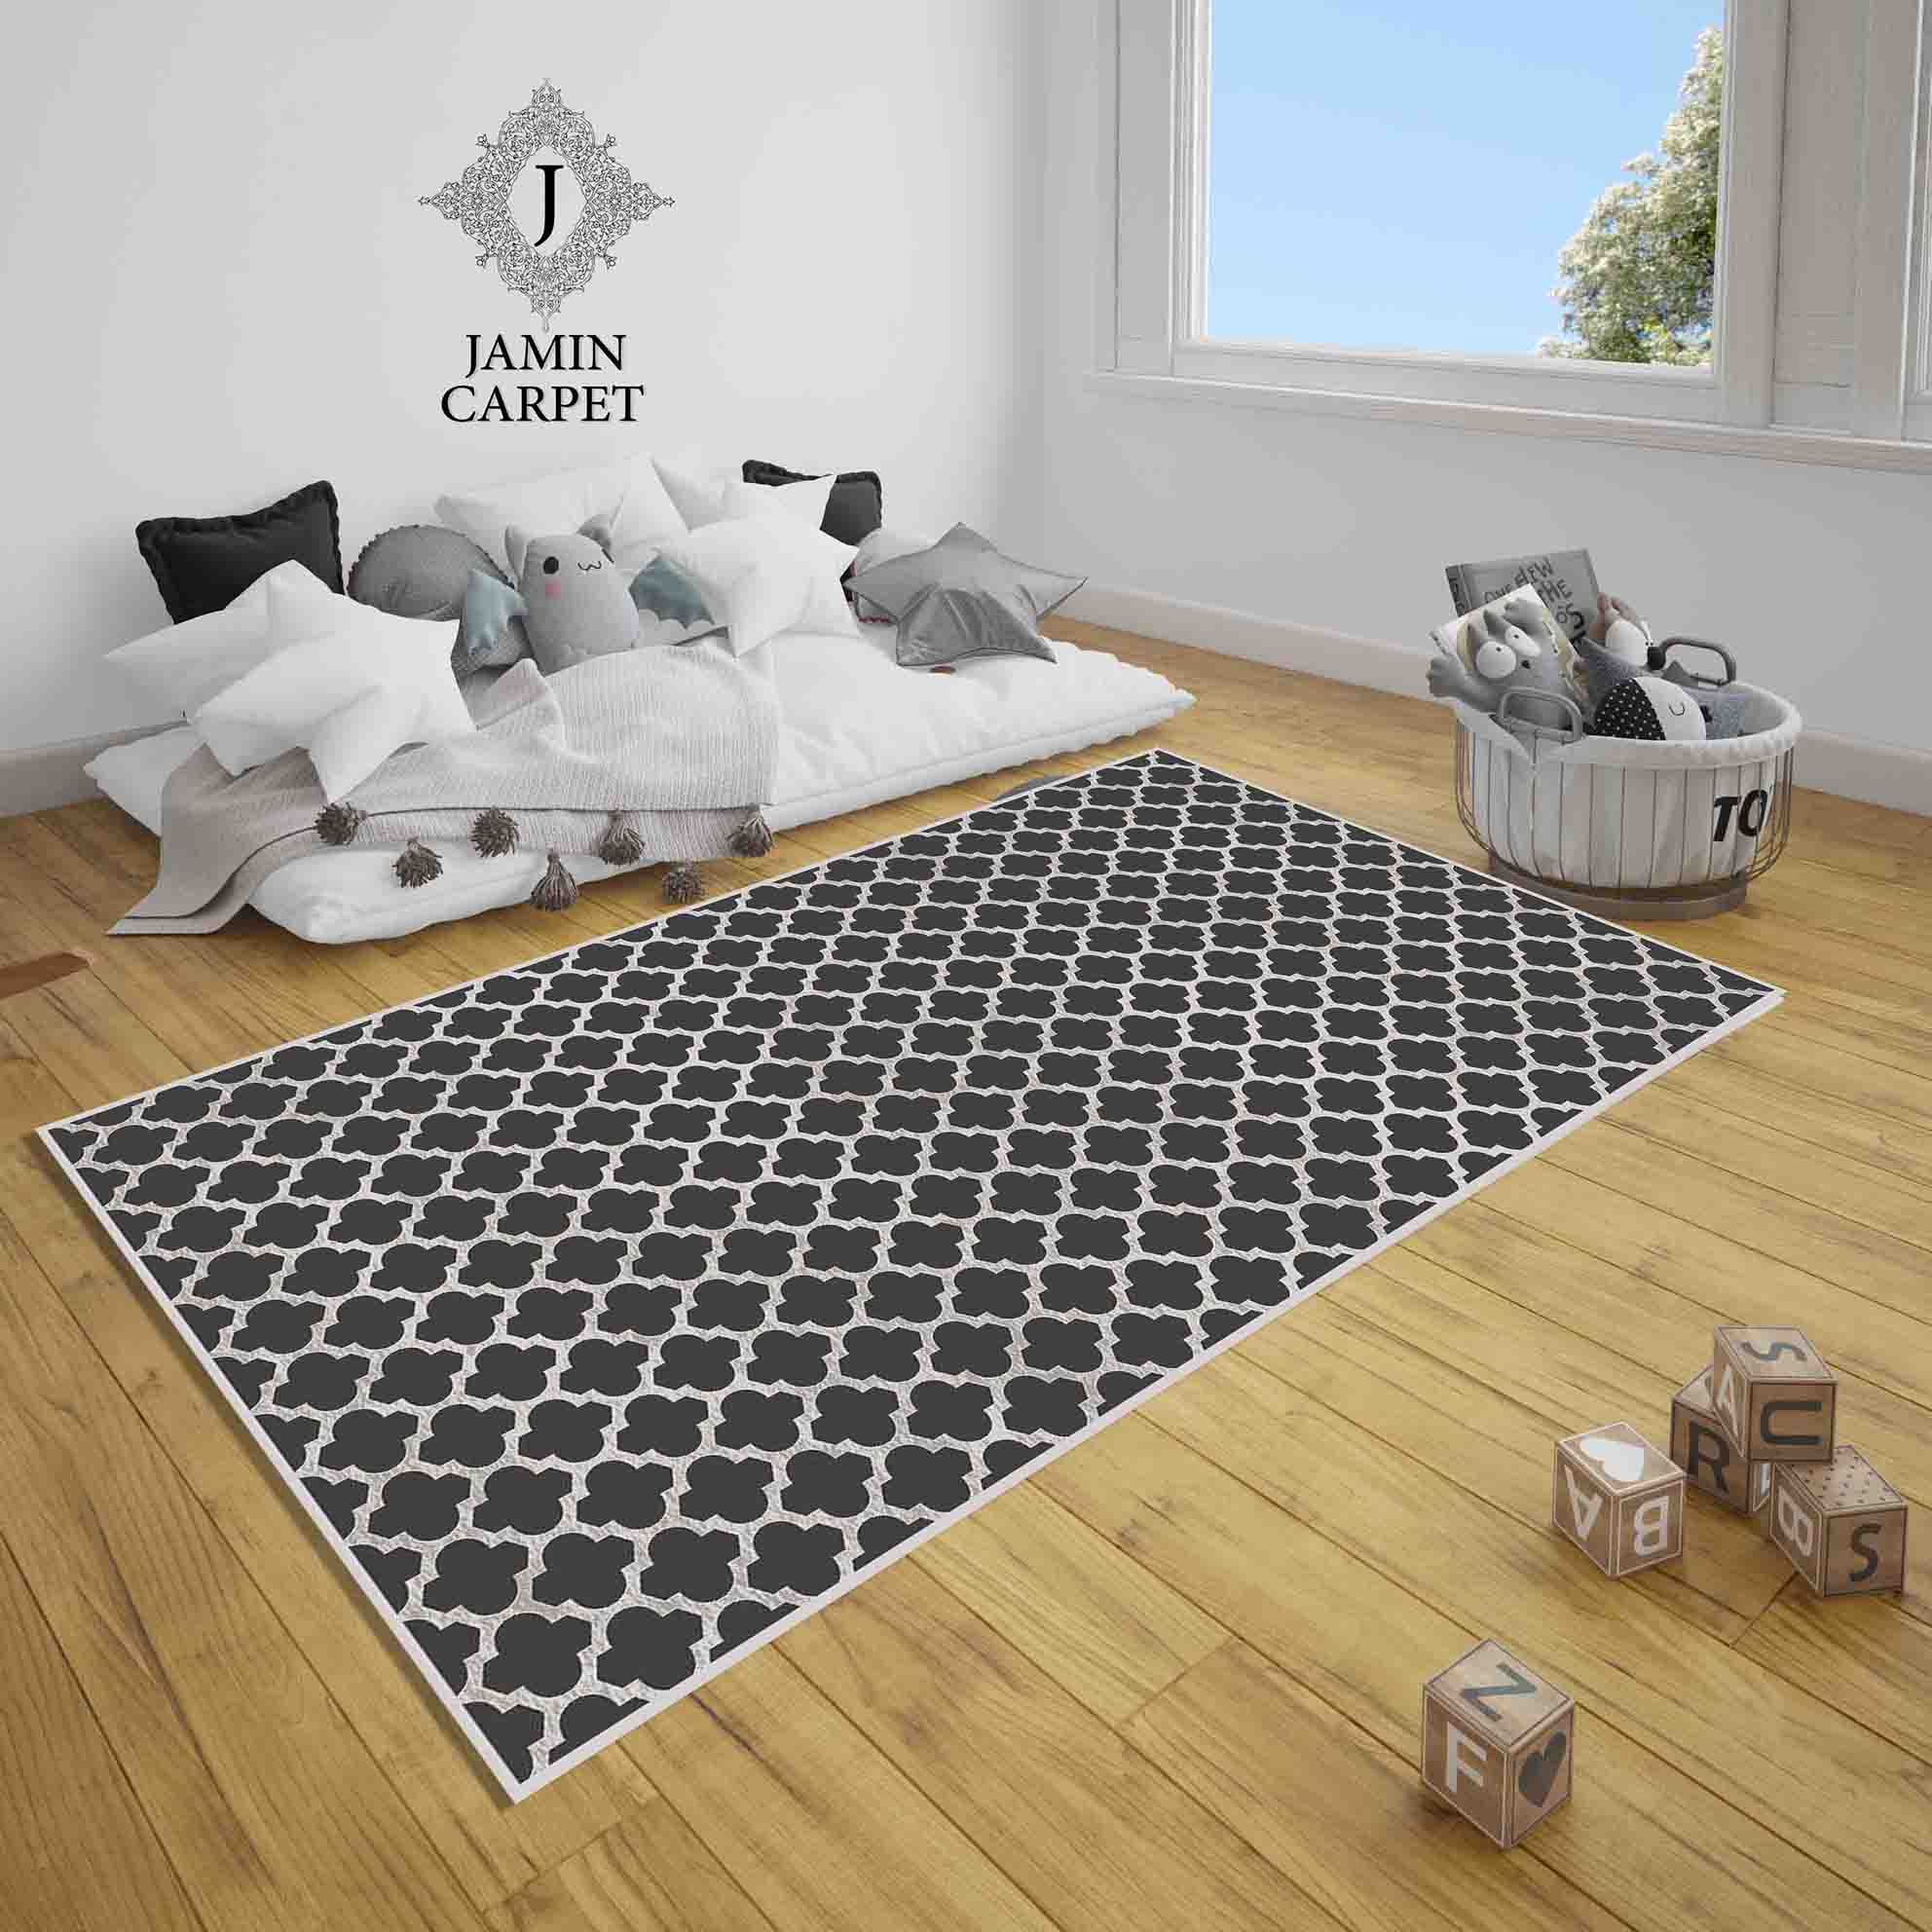 Fantasy carpet code 267 comb 400 density 1800 all acrylic